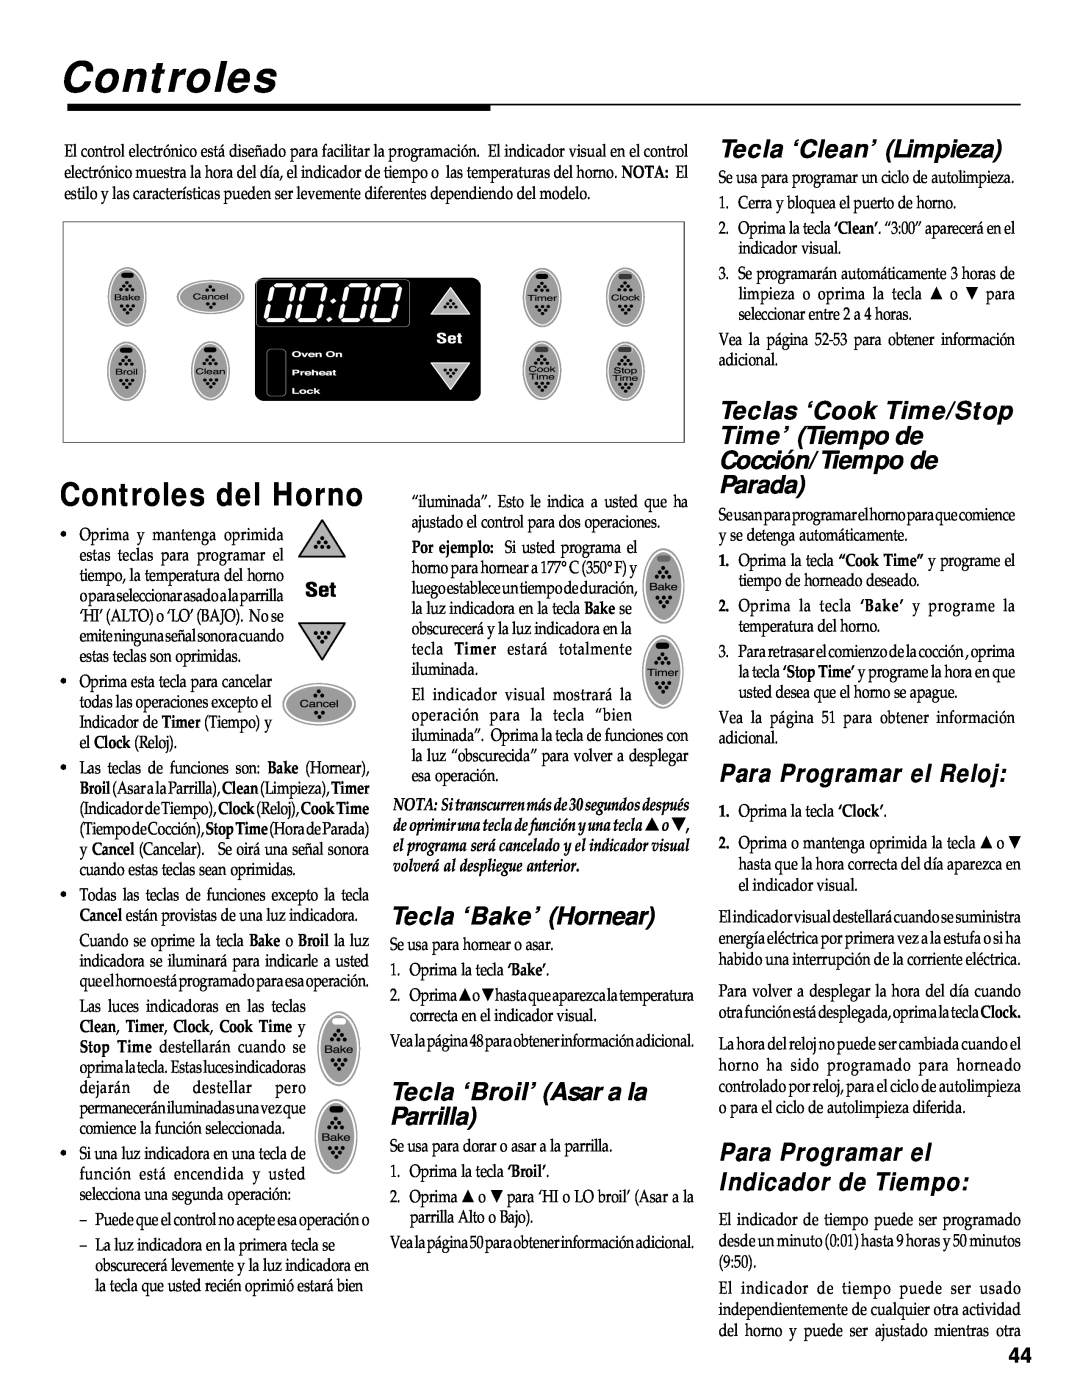 Maytag RS-1 manual Controles del Horno, Tecla ‘Clean’ Limpieza, Tecla ‘Bake’ Hornear, Tecla ‘Broil’ Asar a la Parrilla 